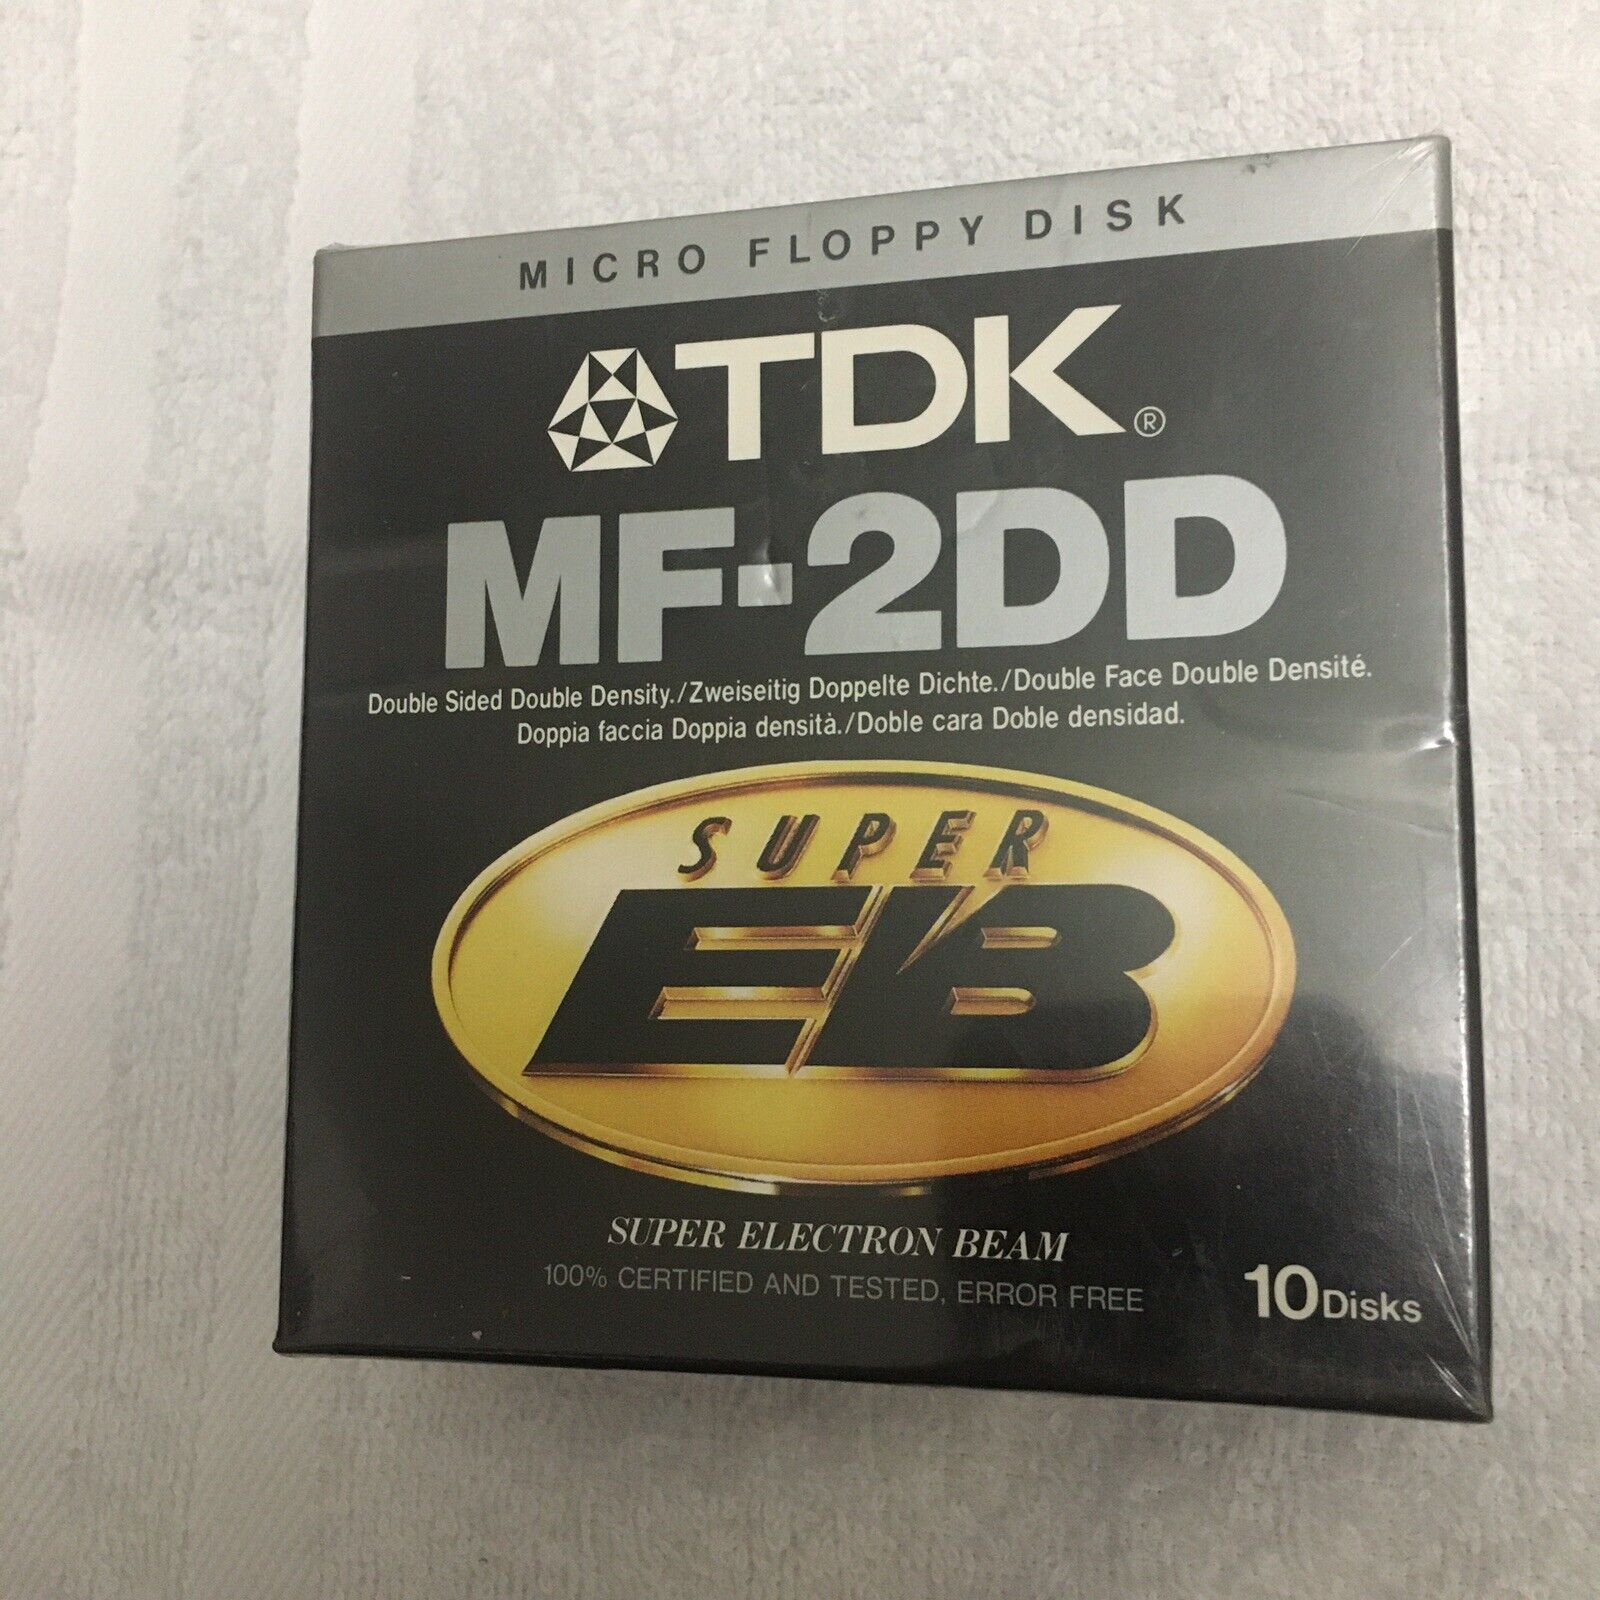 Vintage Media New & Sealed TDK Pack of 10 MF-2DD Micro Floppy Disks Super EB